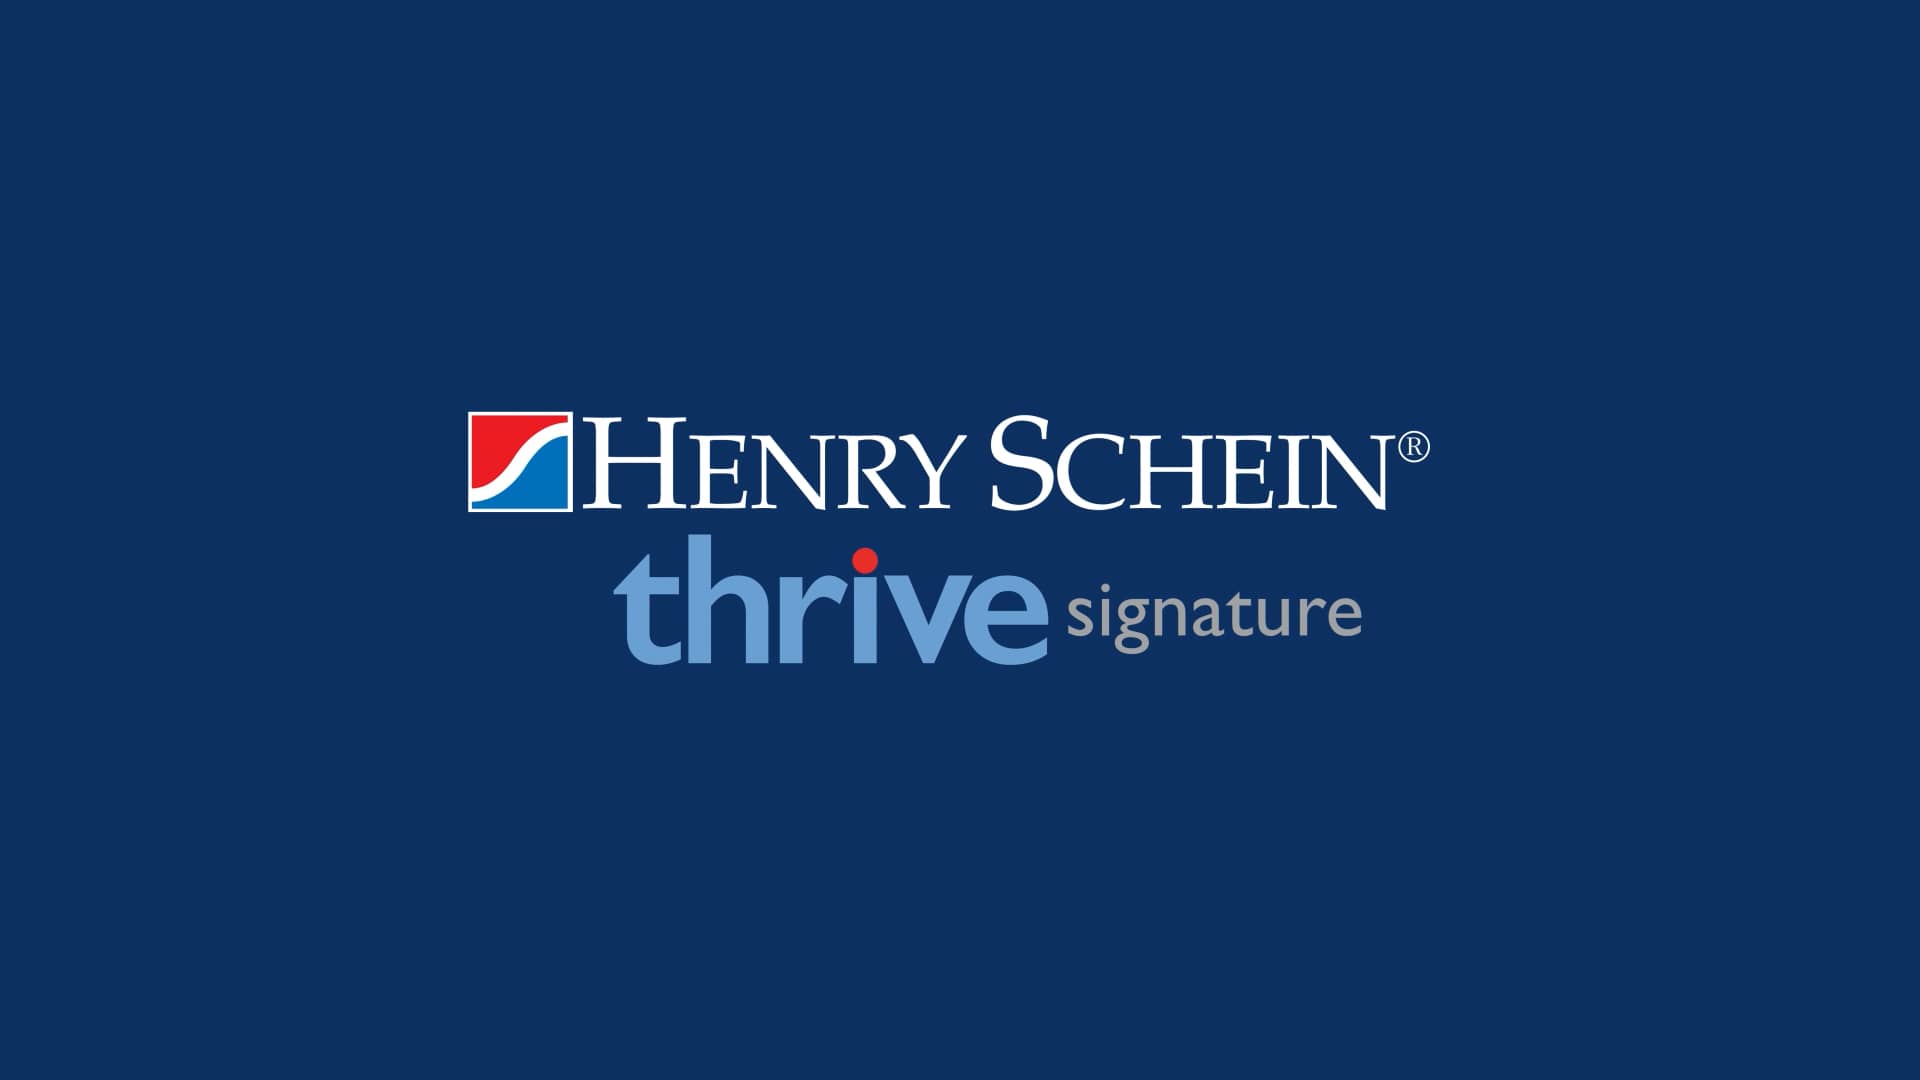 Henry Schein Thrive Signature Membership Program on Vimeo